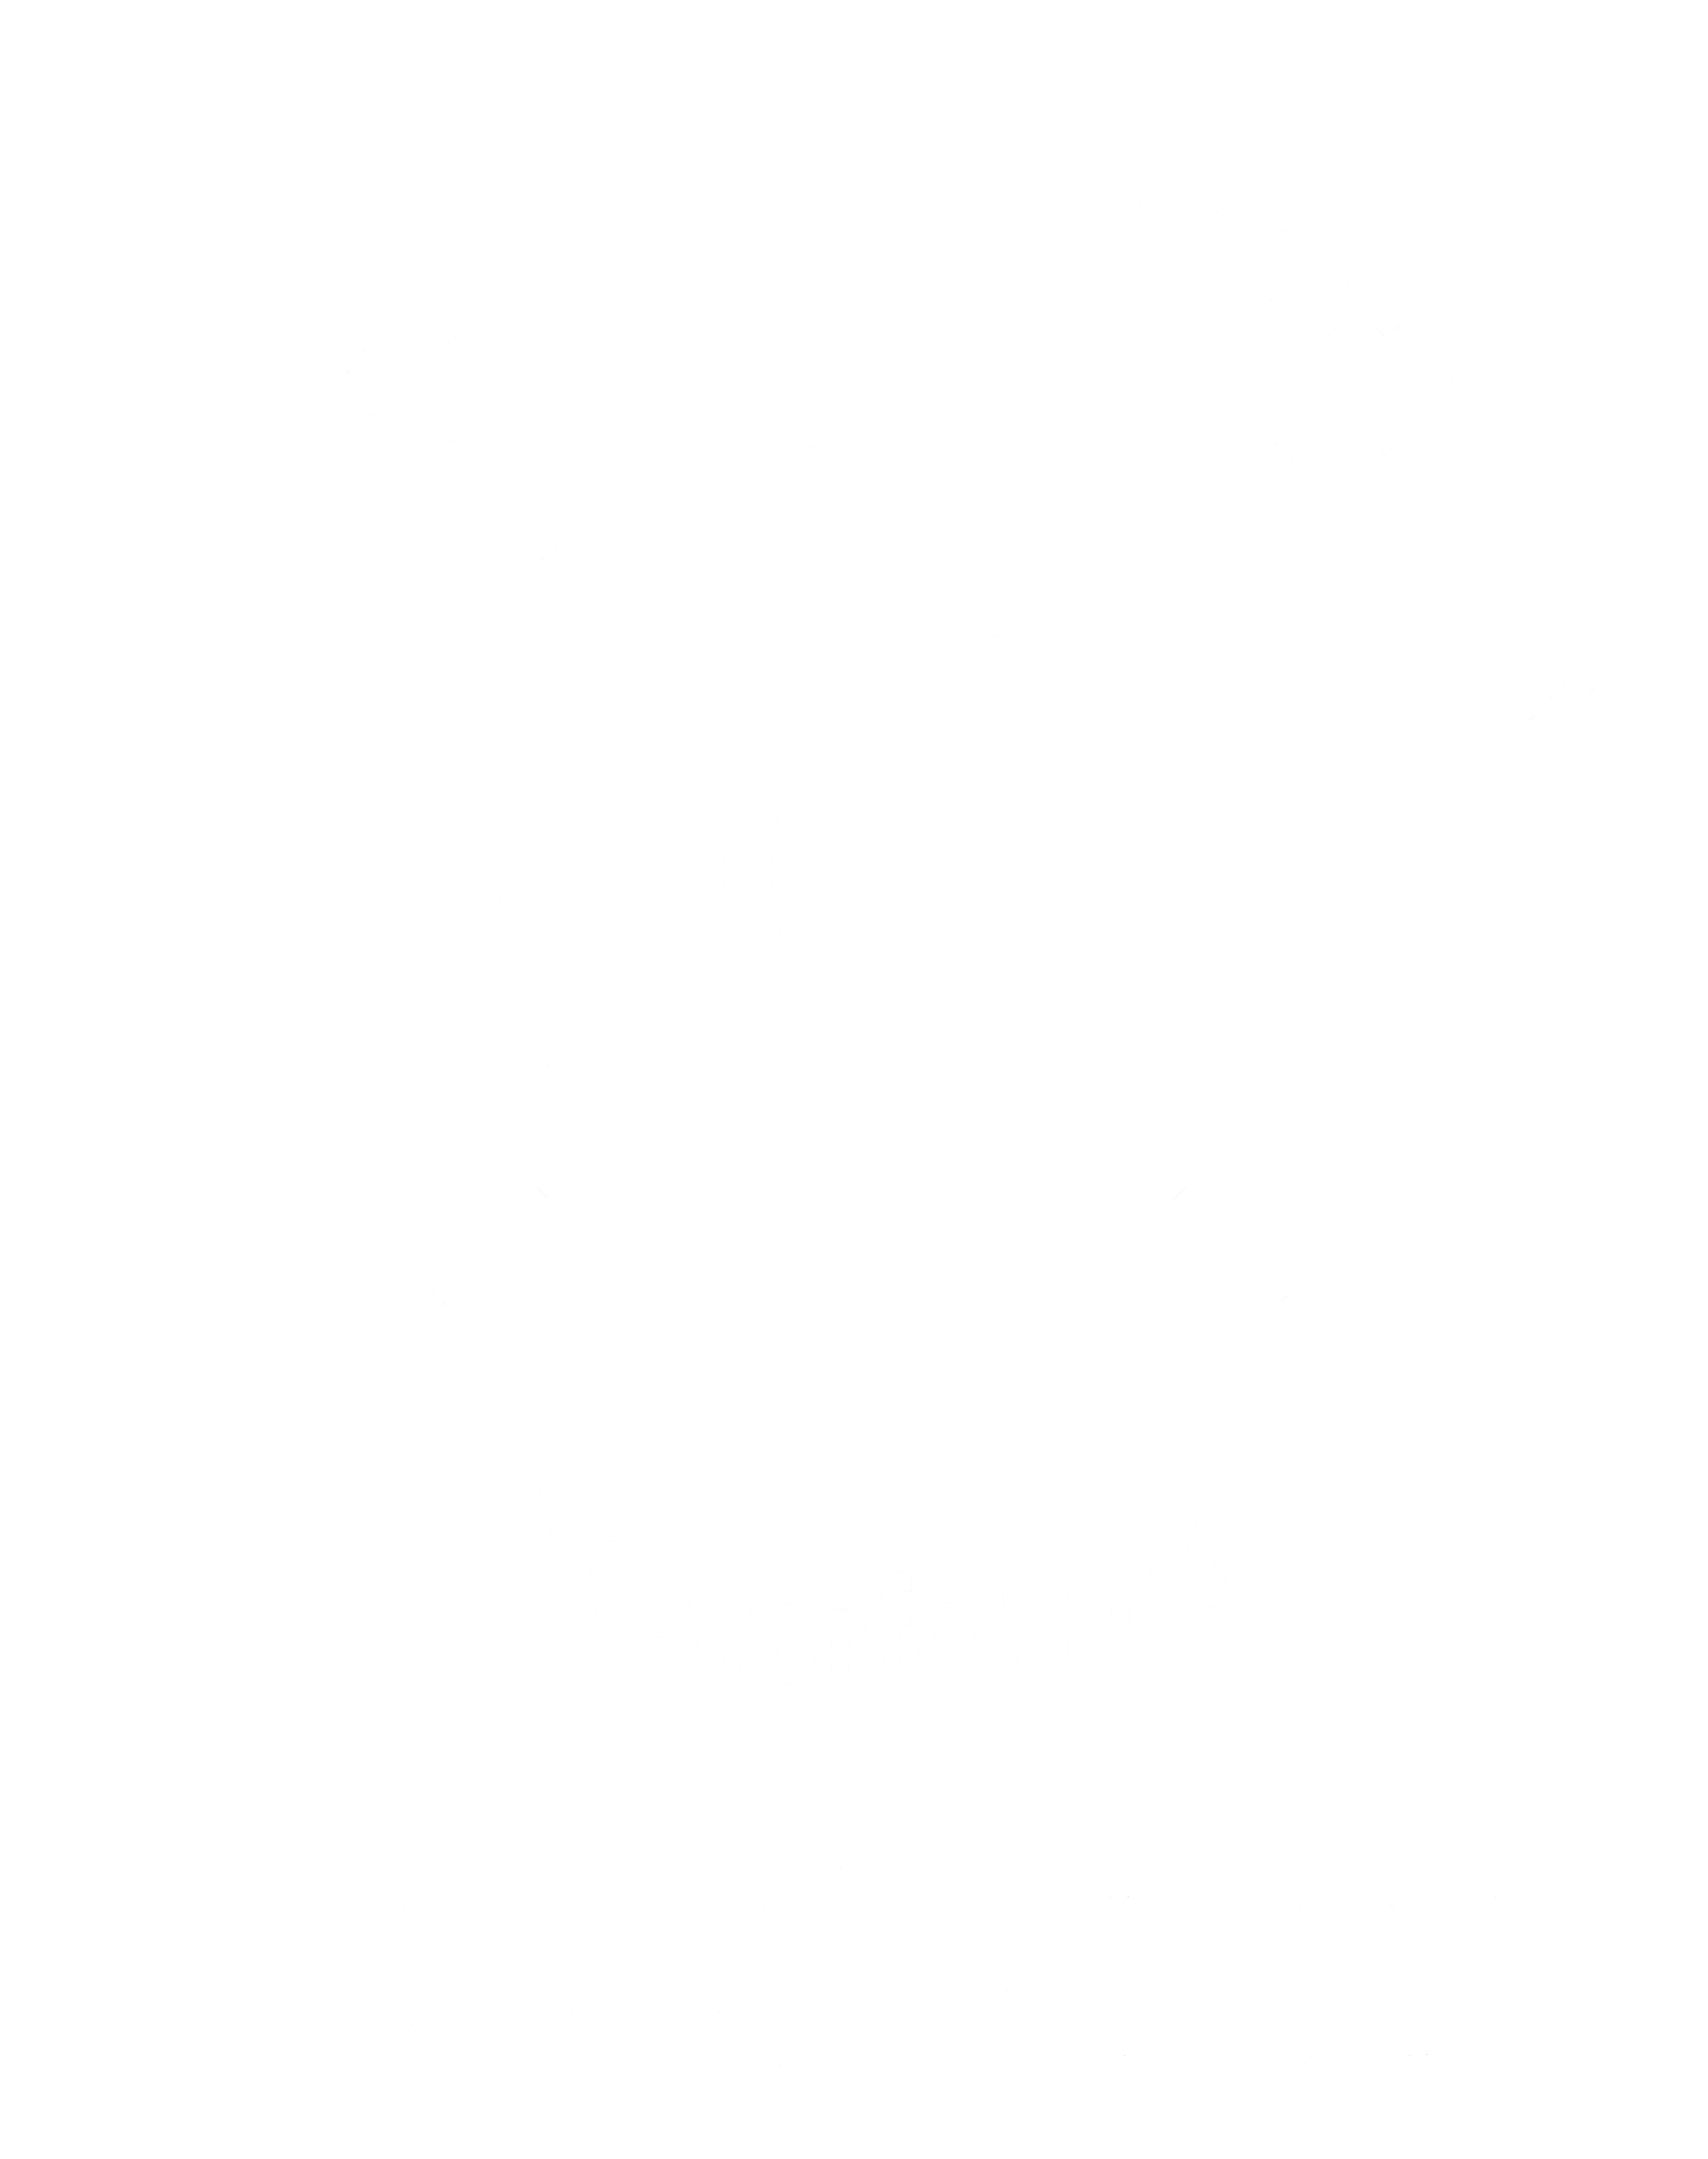 Interior Federal Credit Union Logo 